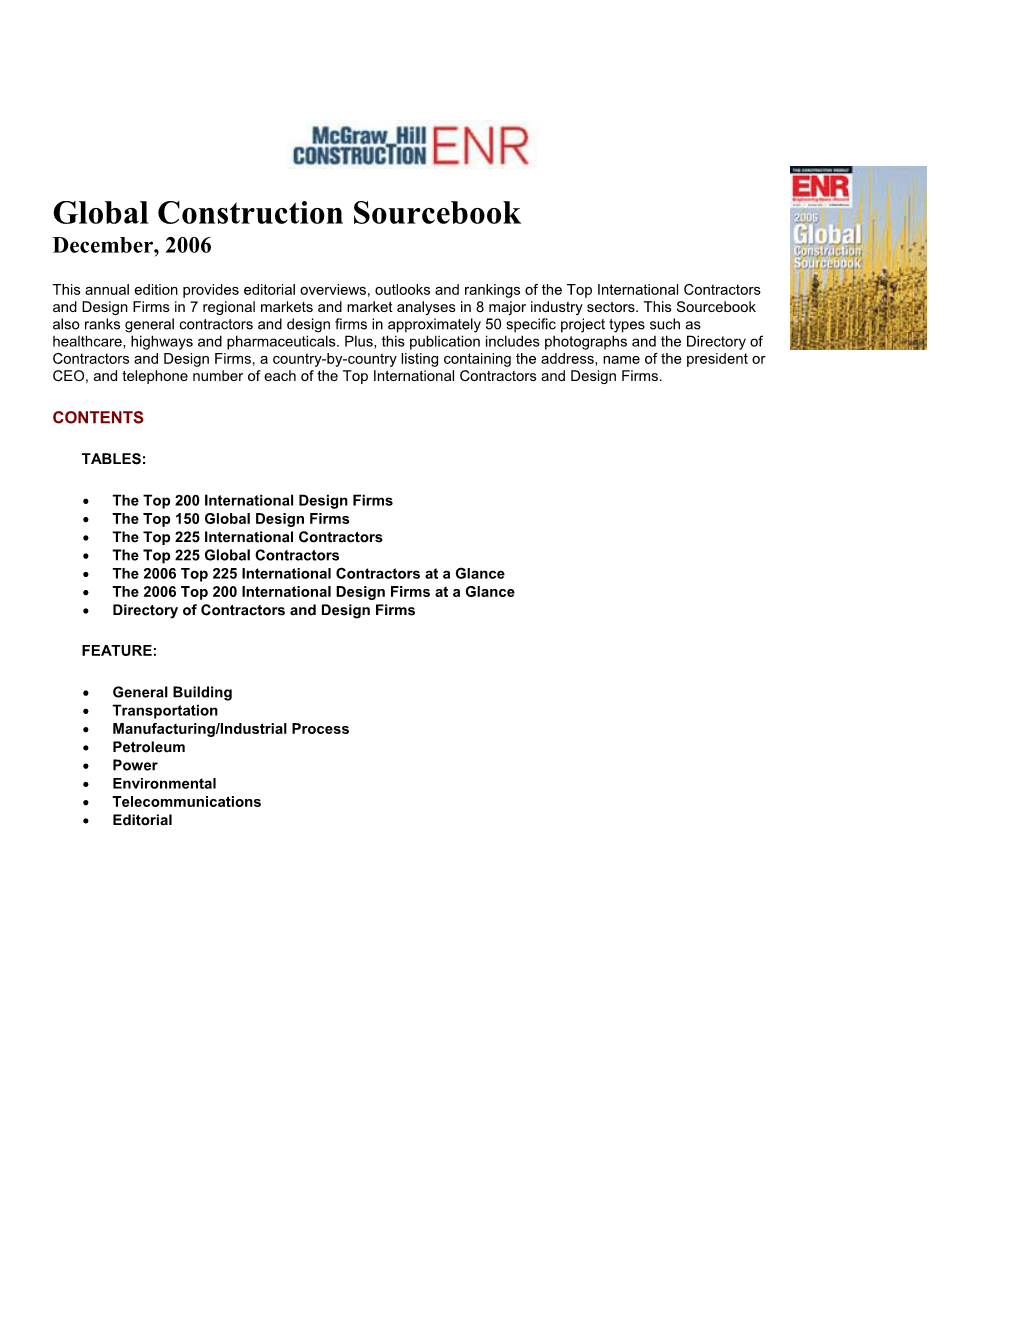 Global Construction Sourcebook December, 2006